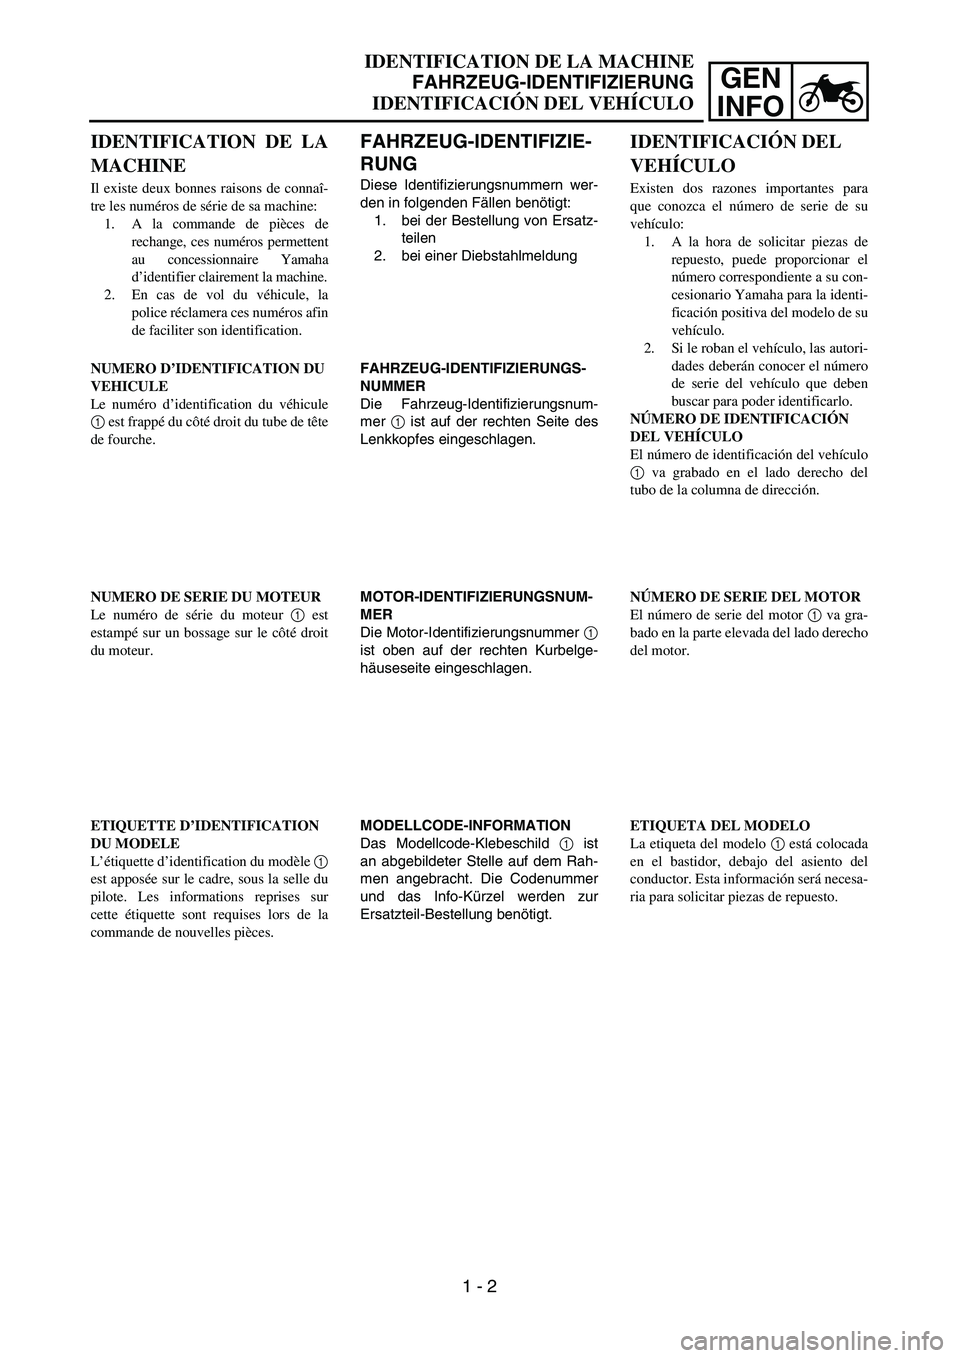 YAMAHA WR 426F 2002  Manuale de Empleo (in Spanish) GEN
INFO
IDENTIFICATION DE LA MACHINE
FAHRZEUG-IDENTIFIZIERUNG
IDENTIFICACIÓN DEL VEHÍCULO
FAHRZEUG-IDENTIFIZIE-
RUNG
Diese Identifizierungsnummern wer-
den in folgenden Fällen benötigt:
1. bei de